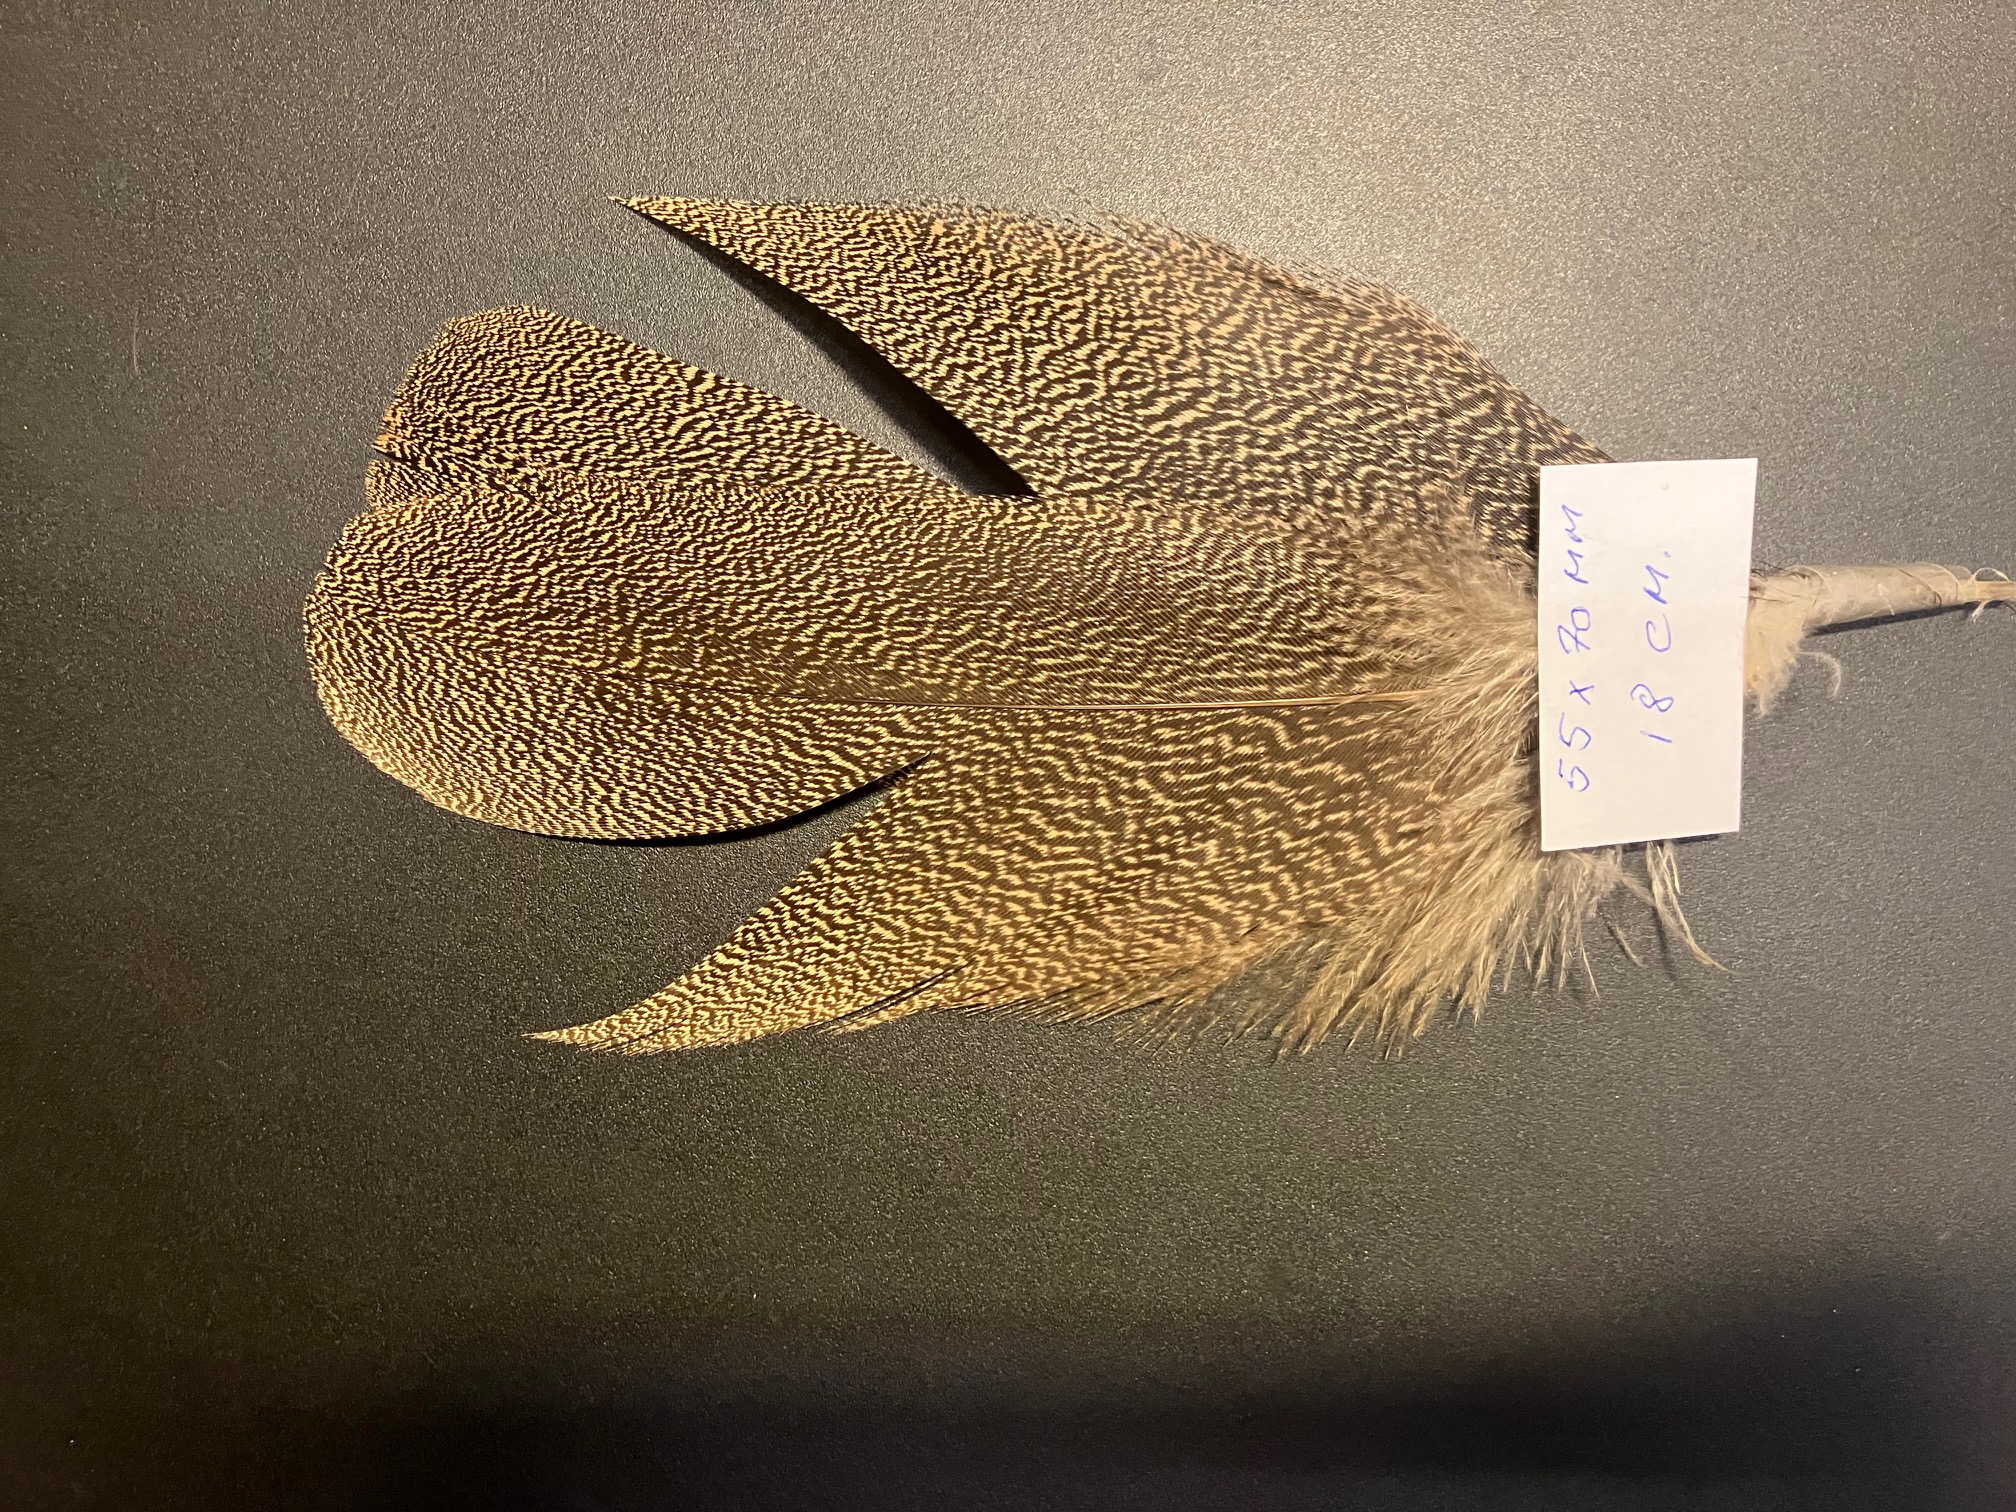 Kori bustard shoulder feather 26